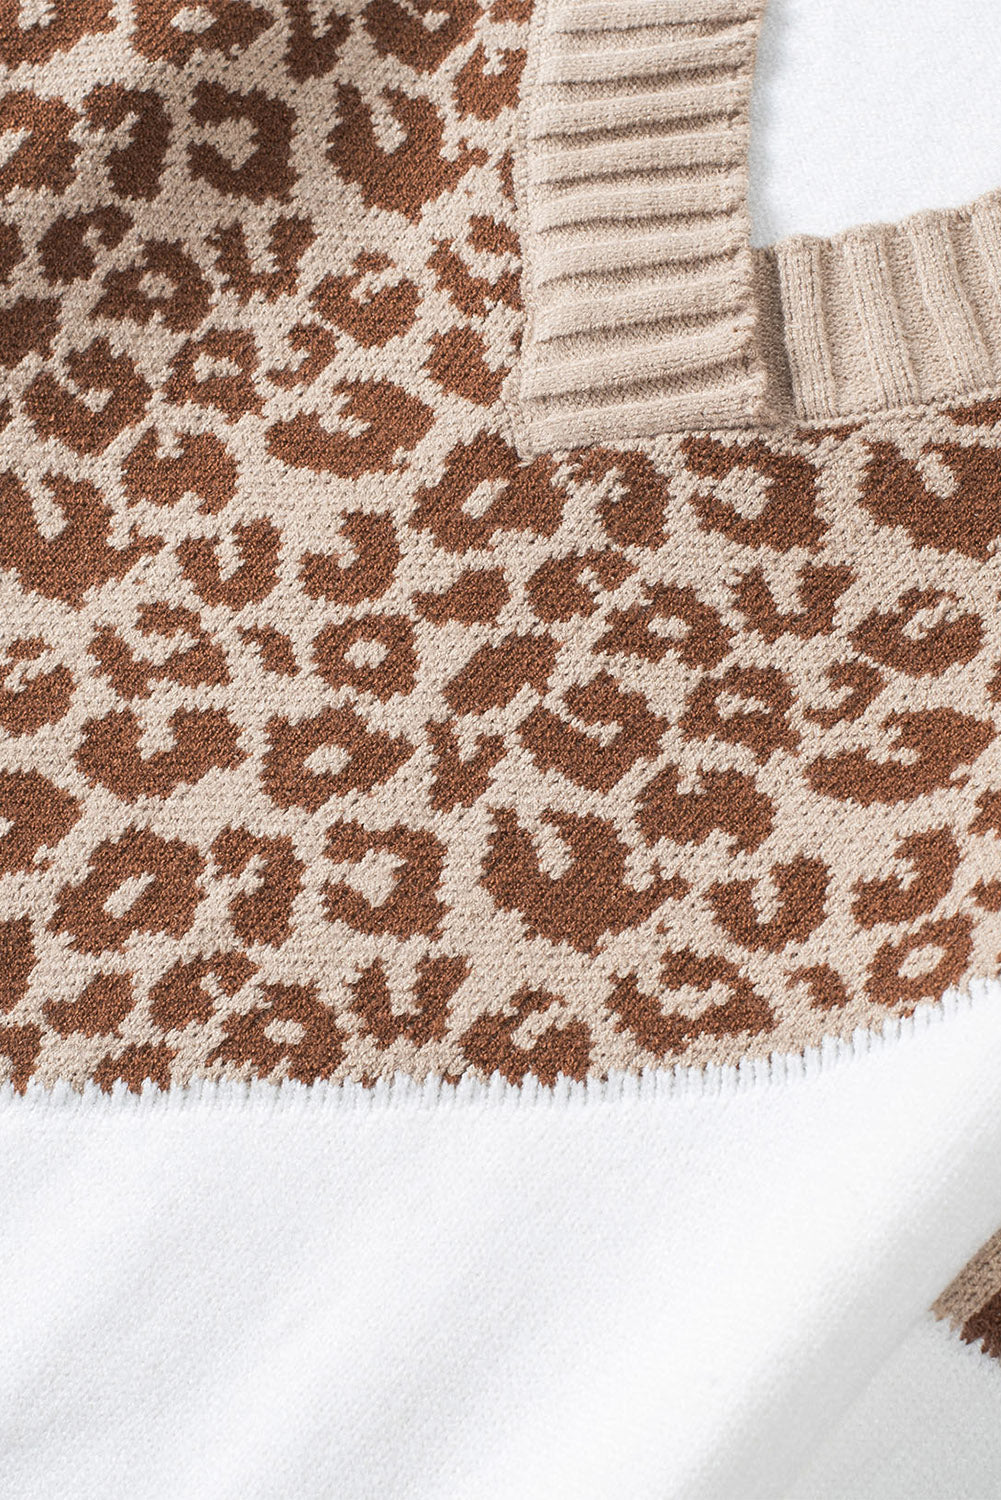 Leopard Splicing Off Shoulder Pullover Sweater Sweaters & Cardigans JT's Designer Fashion